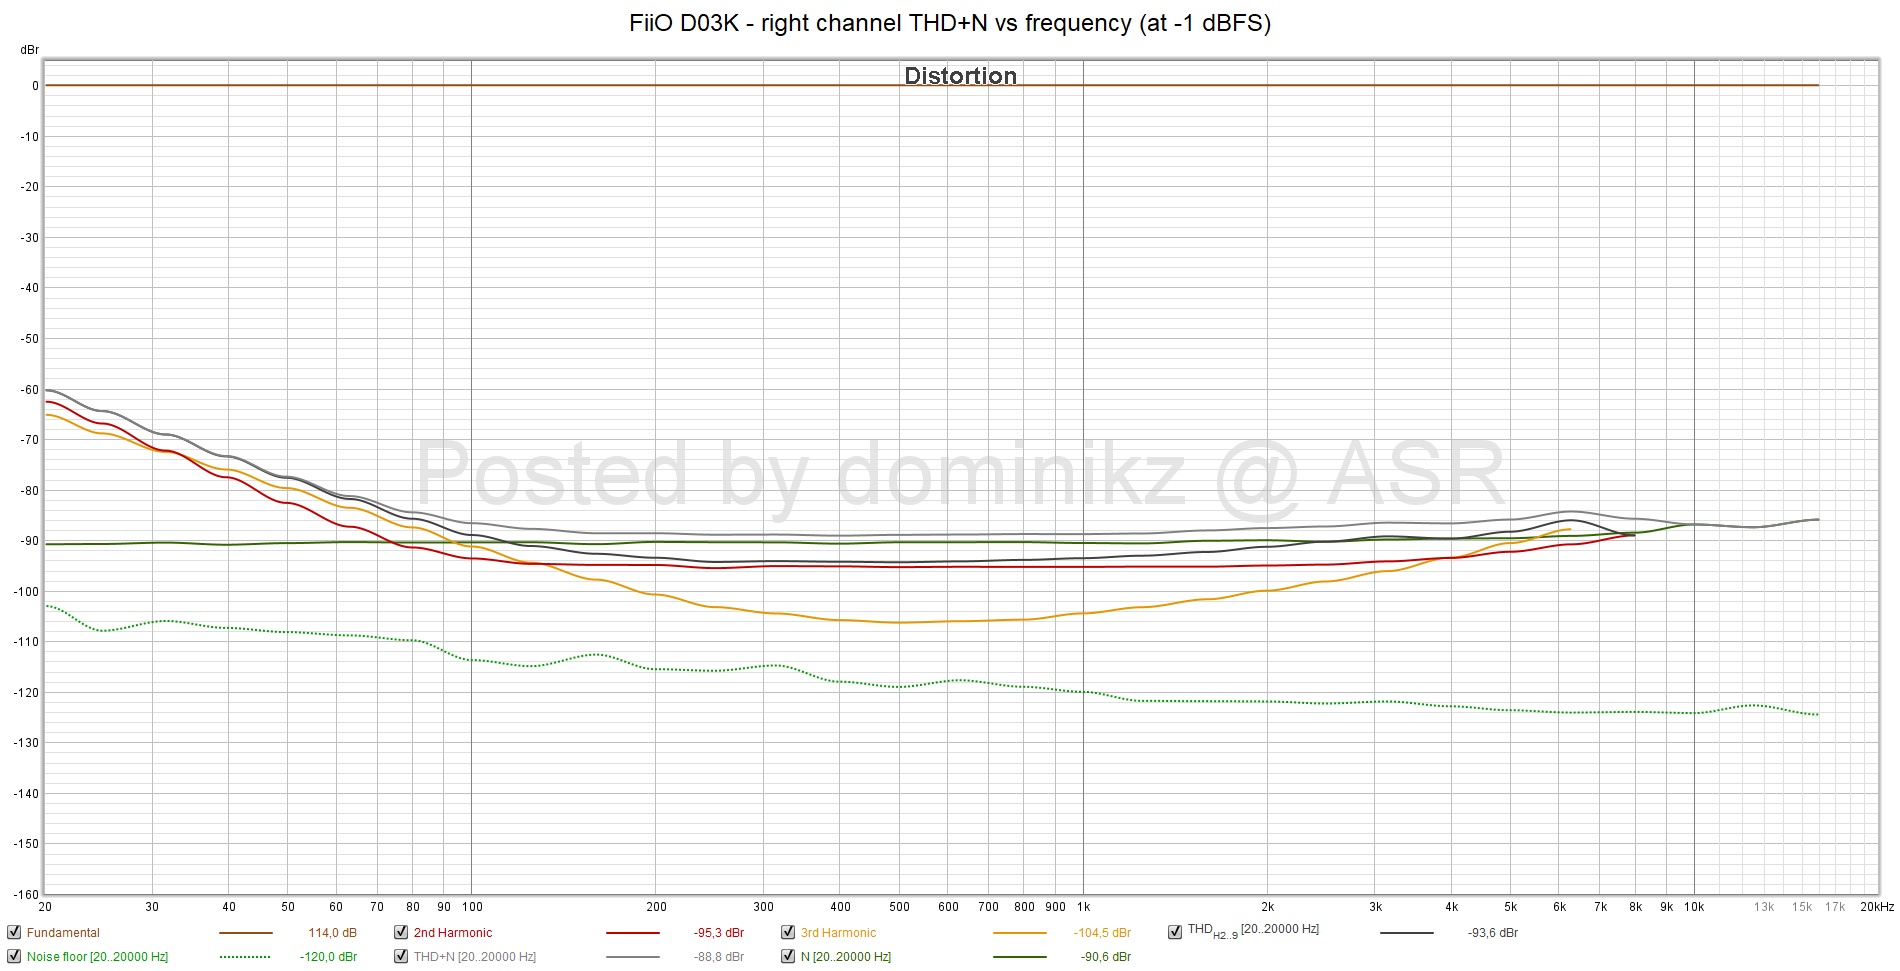 FiiO D03K - right channel THD+N vs frequency (at -1 dBFS).jpg